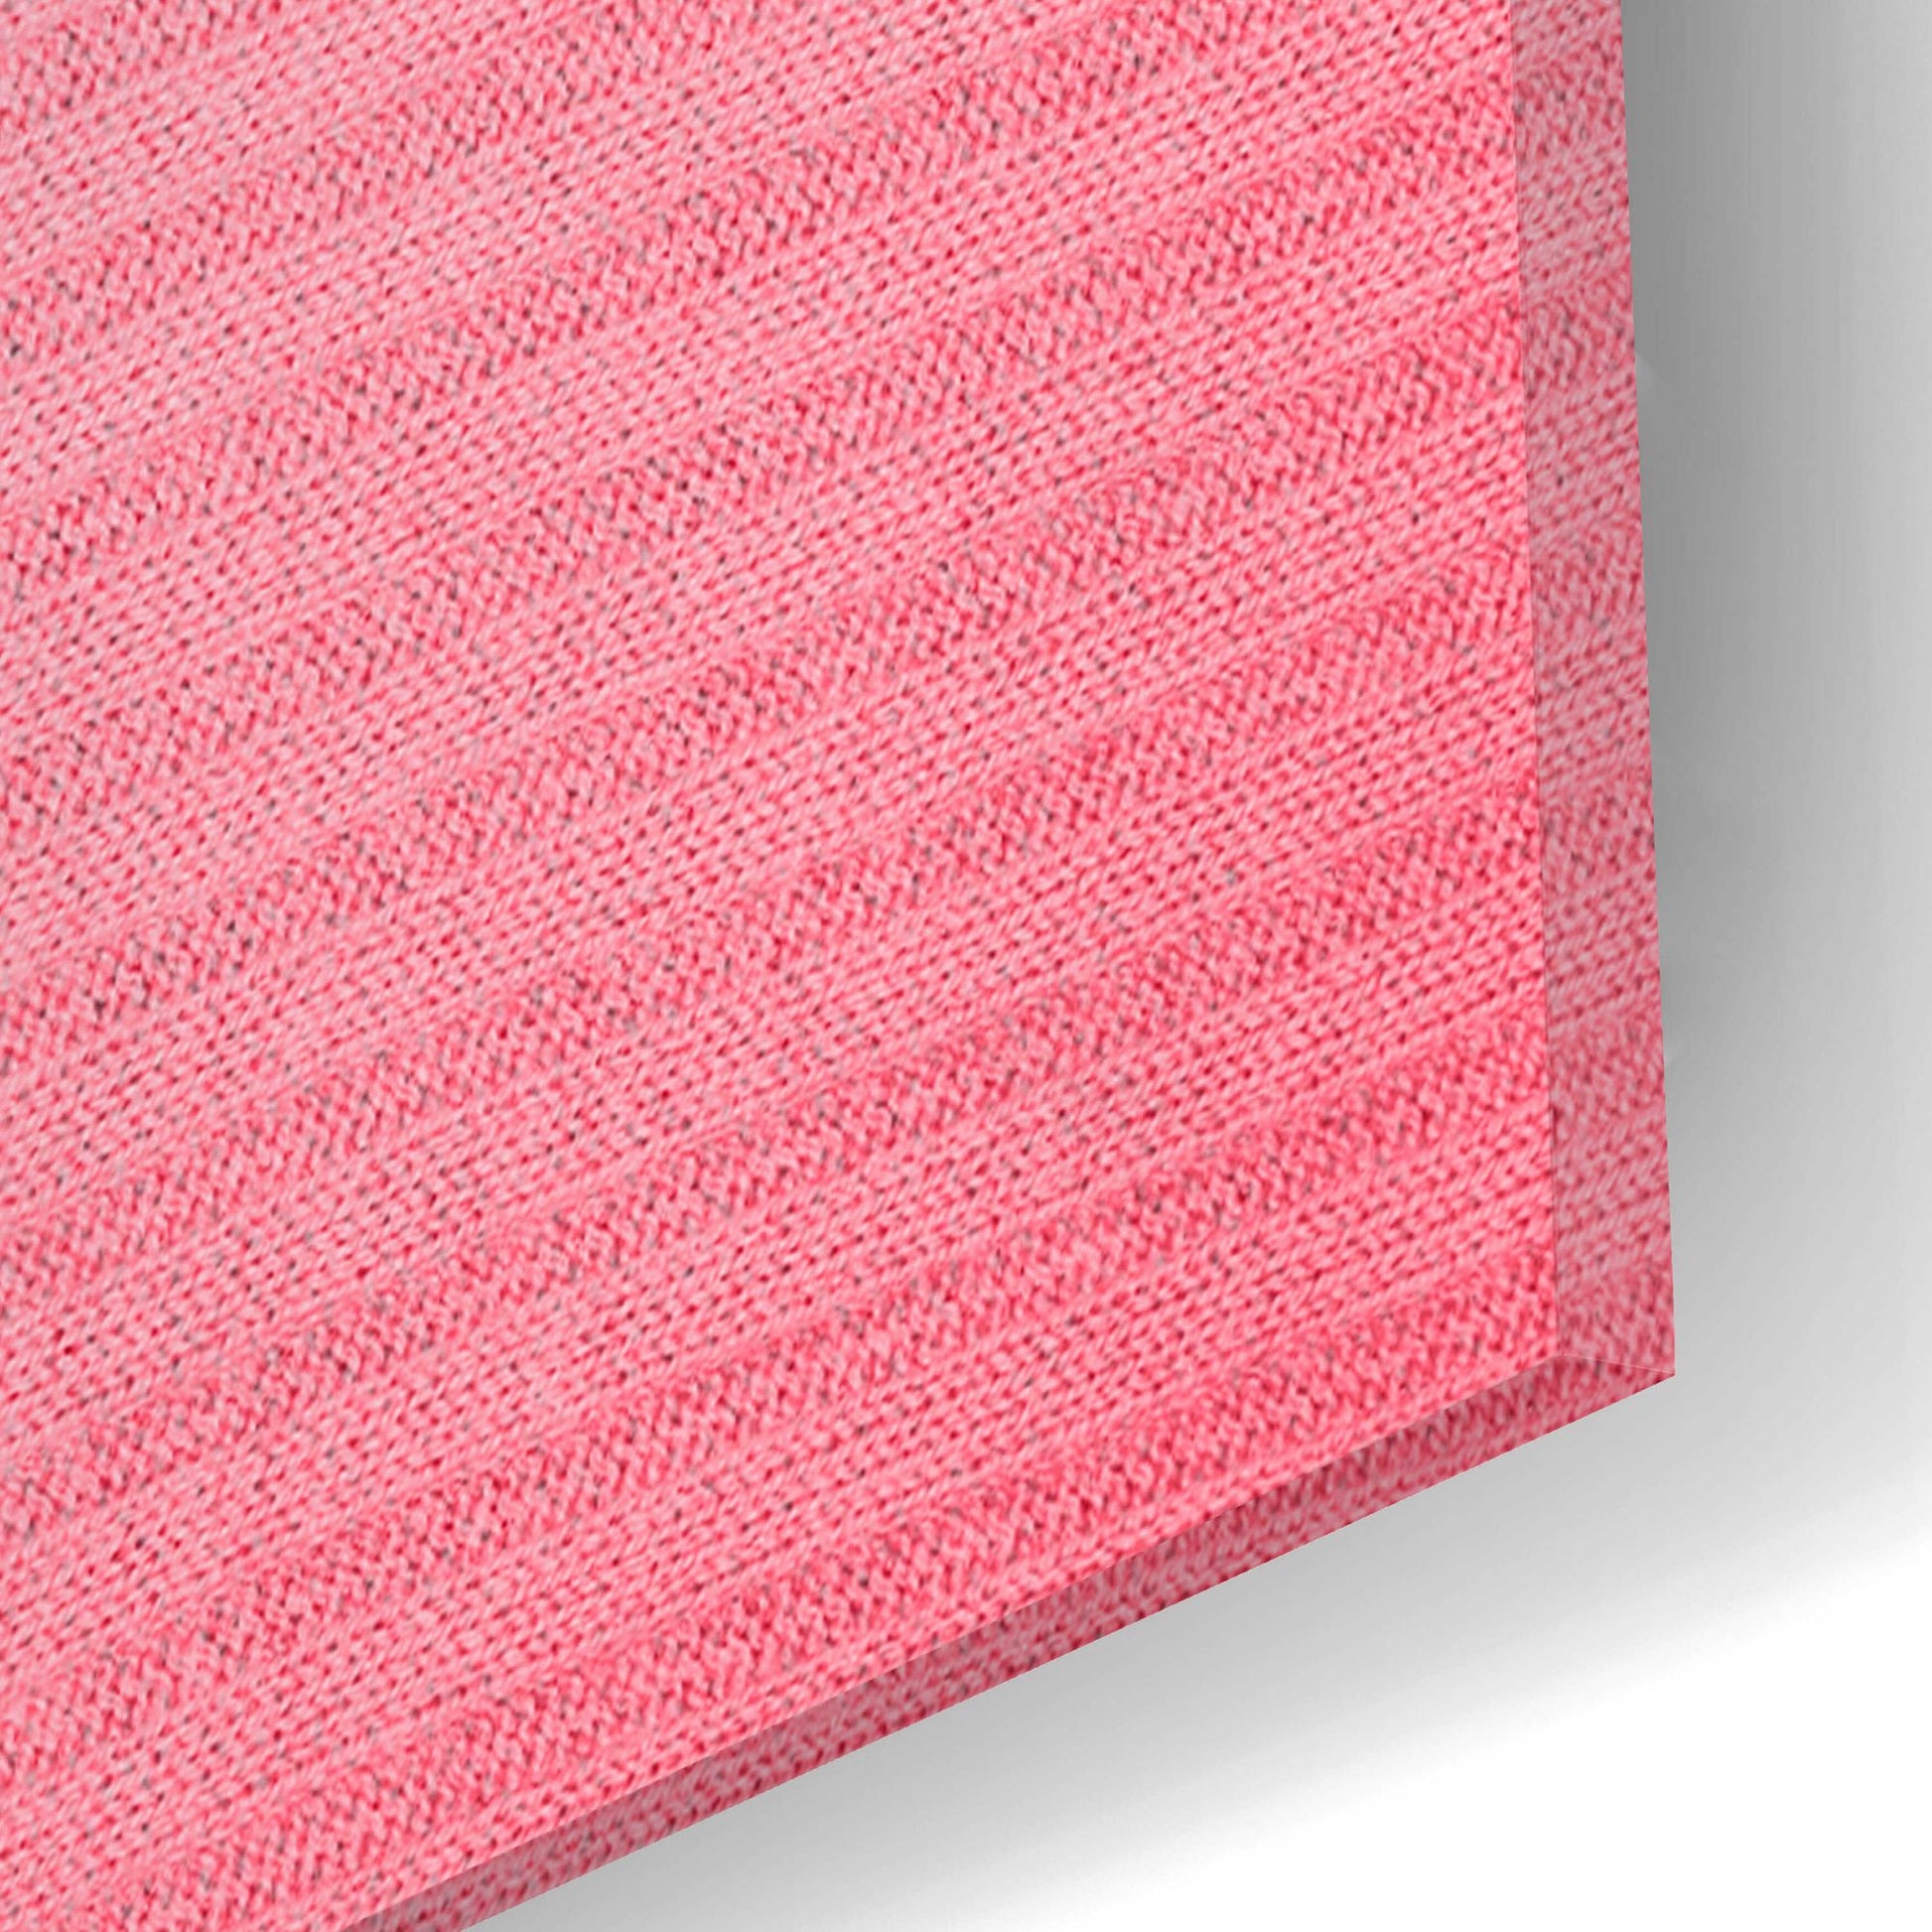 Epic Art 'Patch Heart Pink' by Rachel Caldwell, Acrylic Glass Wall Art,12x16